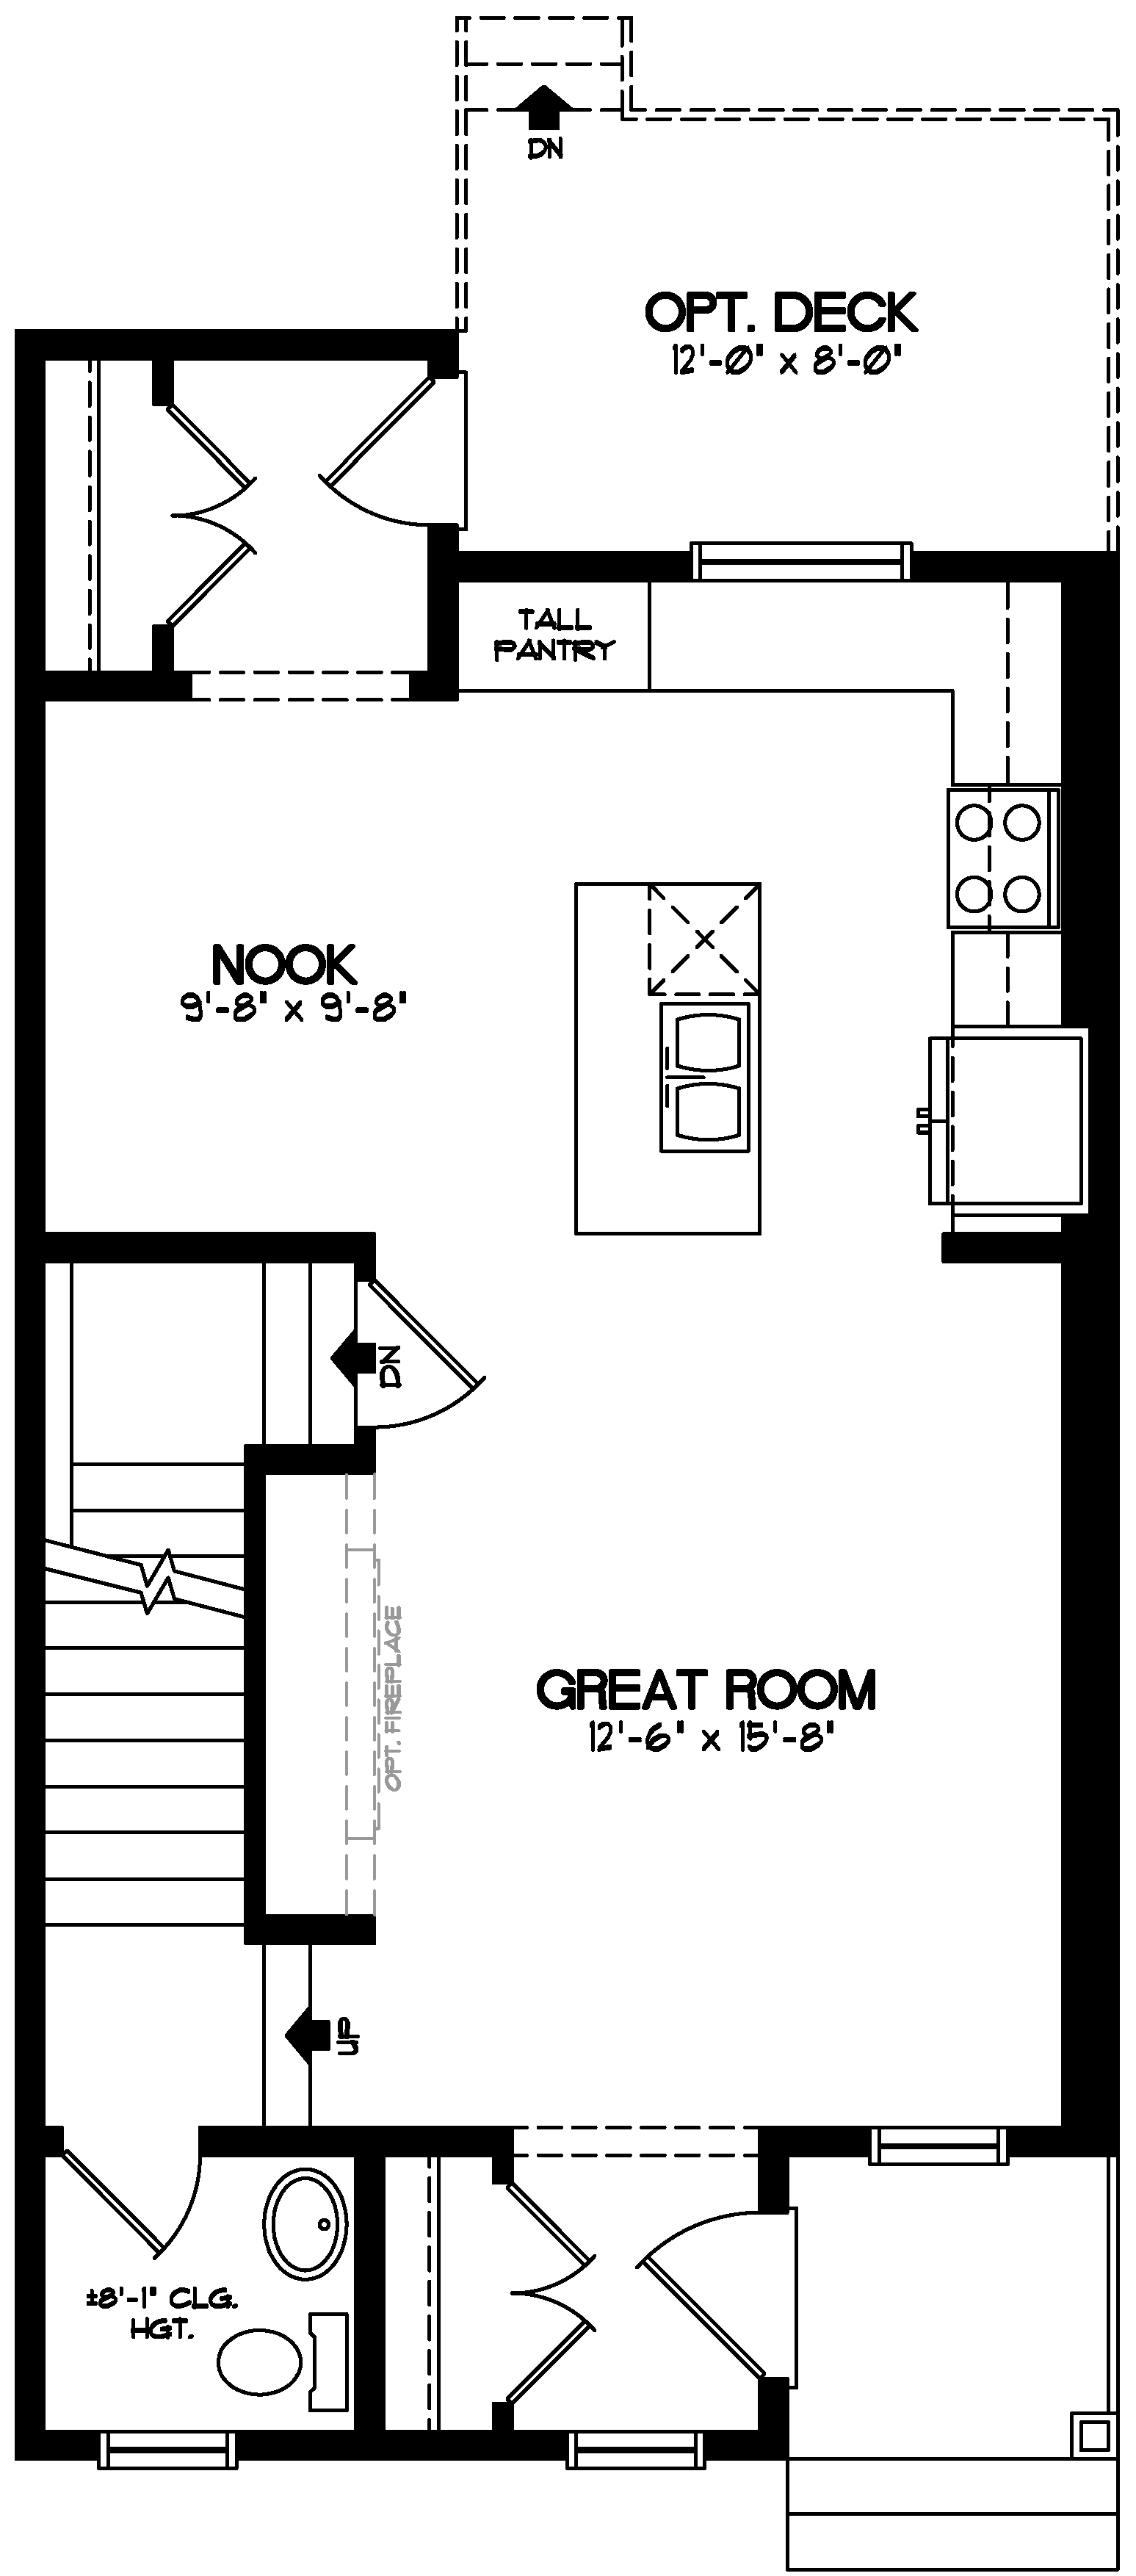 Ascent Home Model Floor Plans